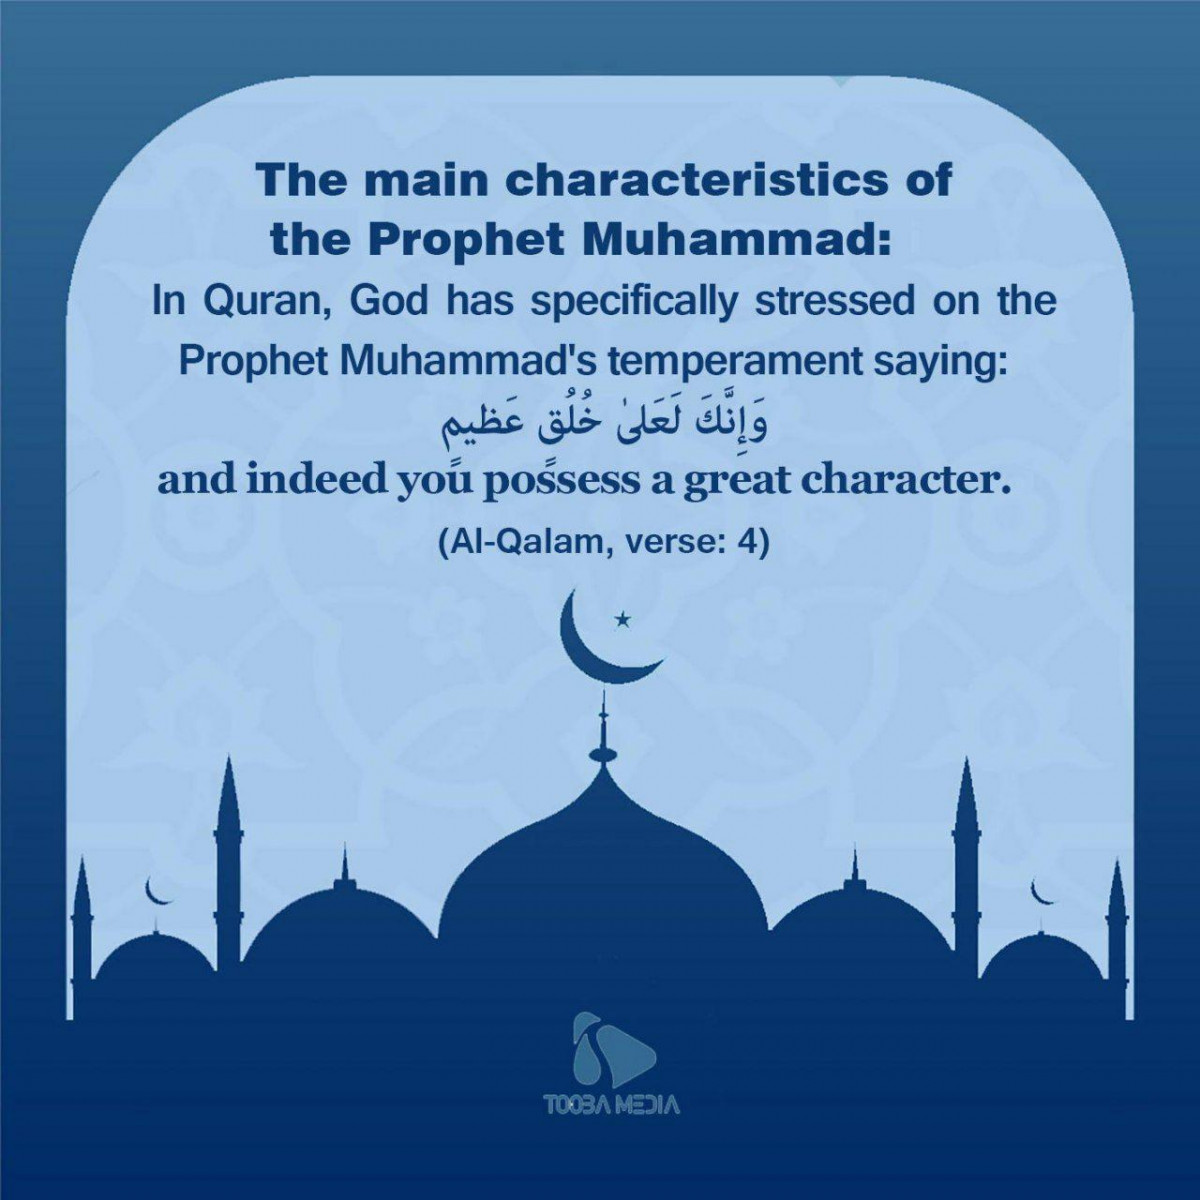 The main characteristics of the Prophet Muhammad